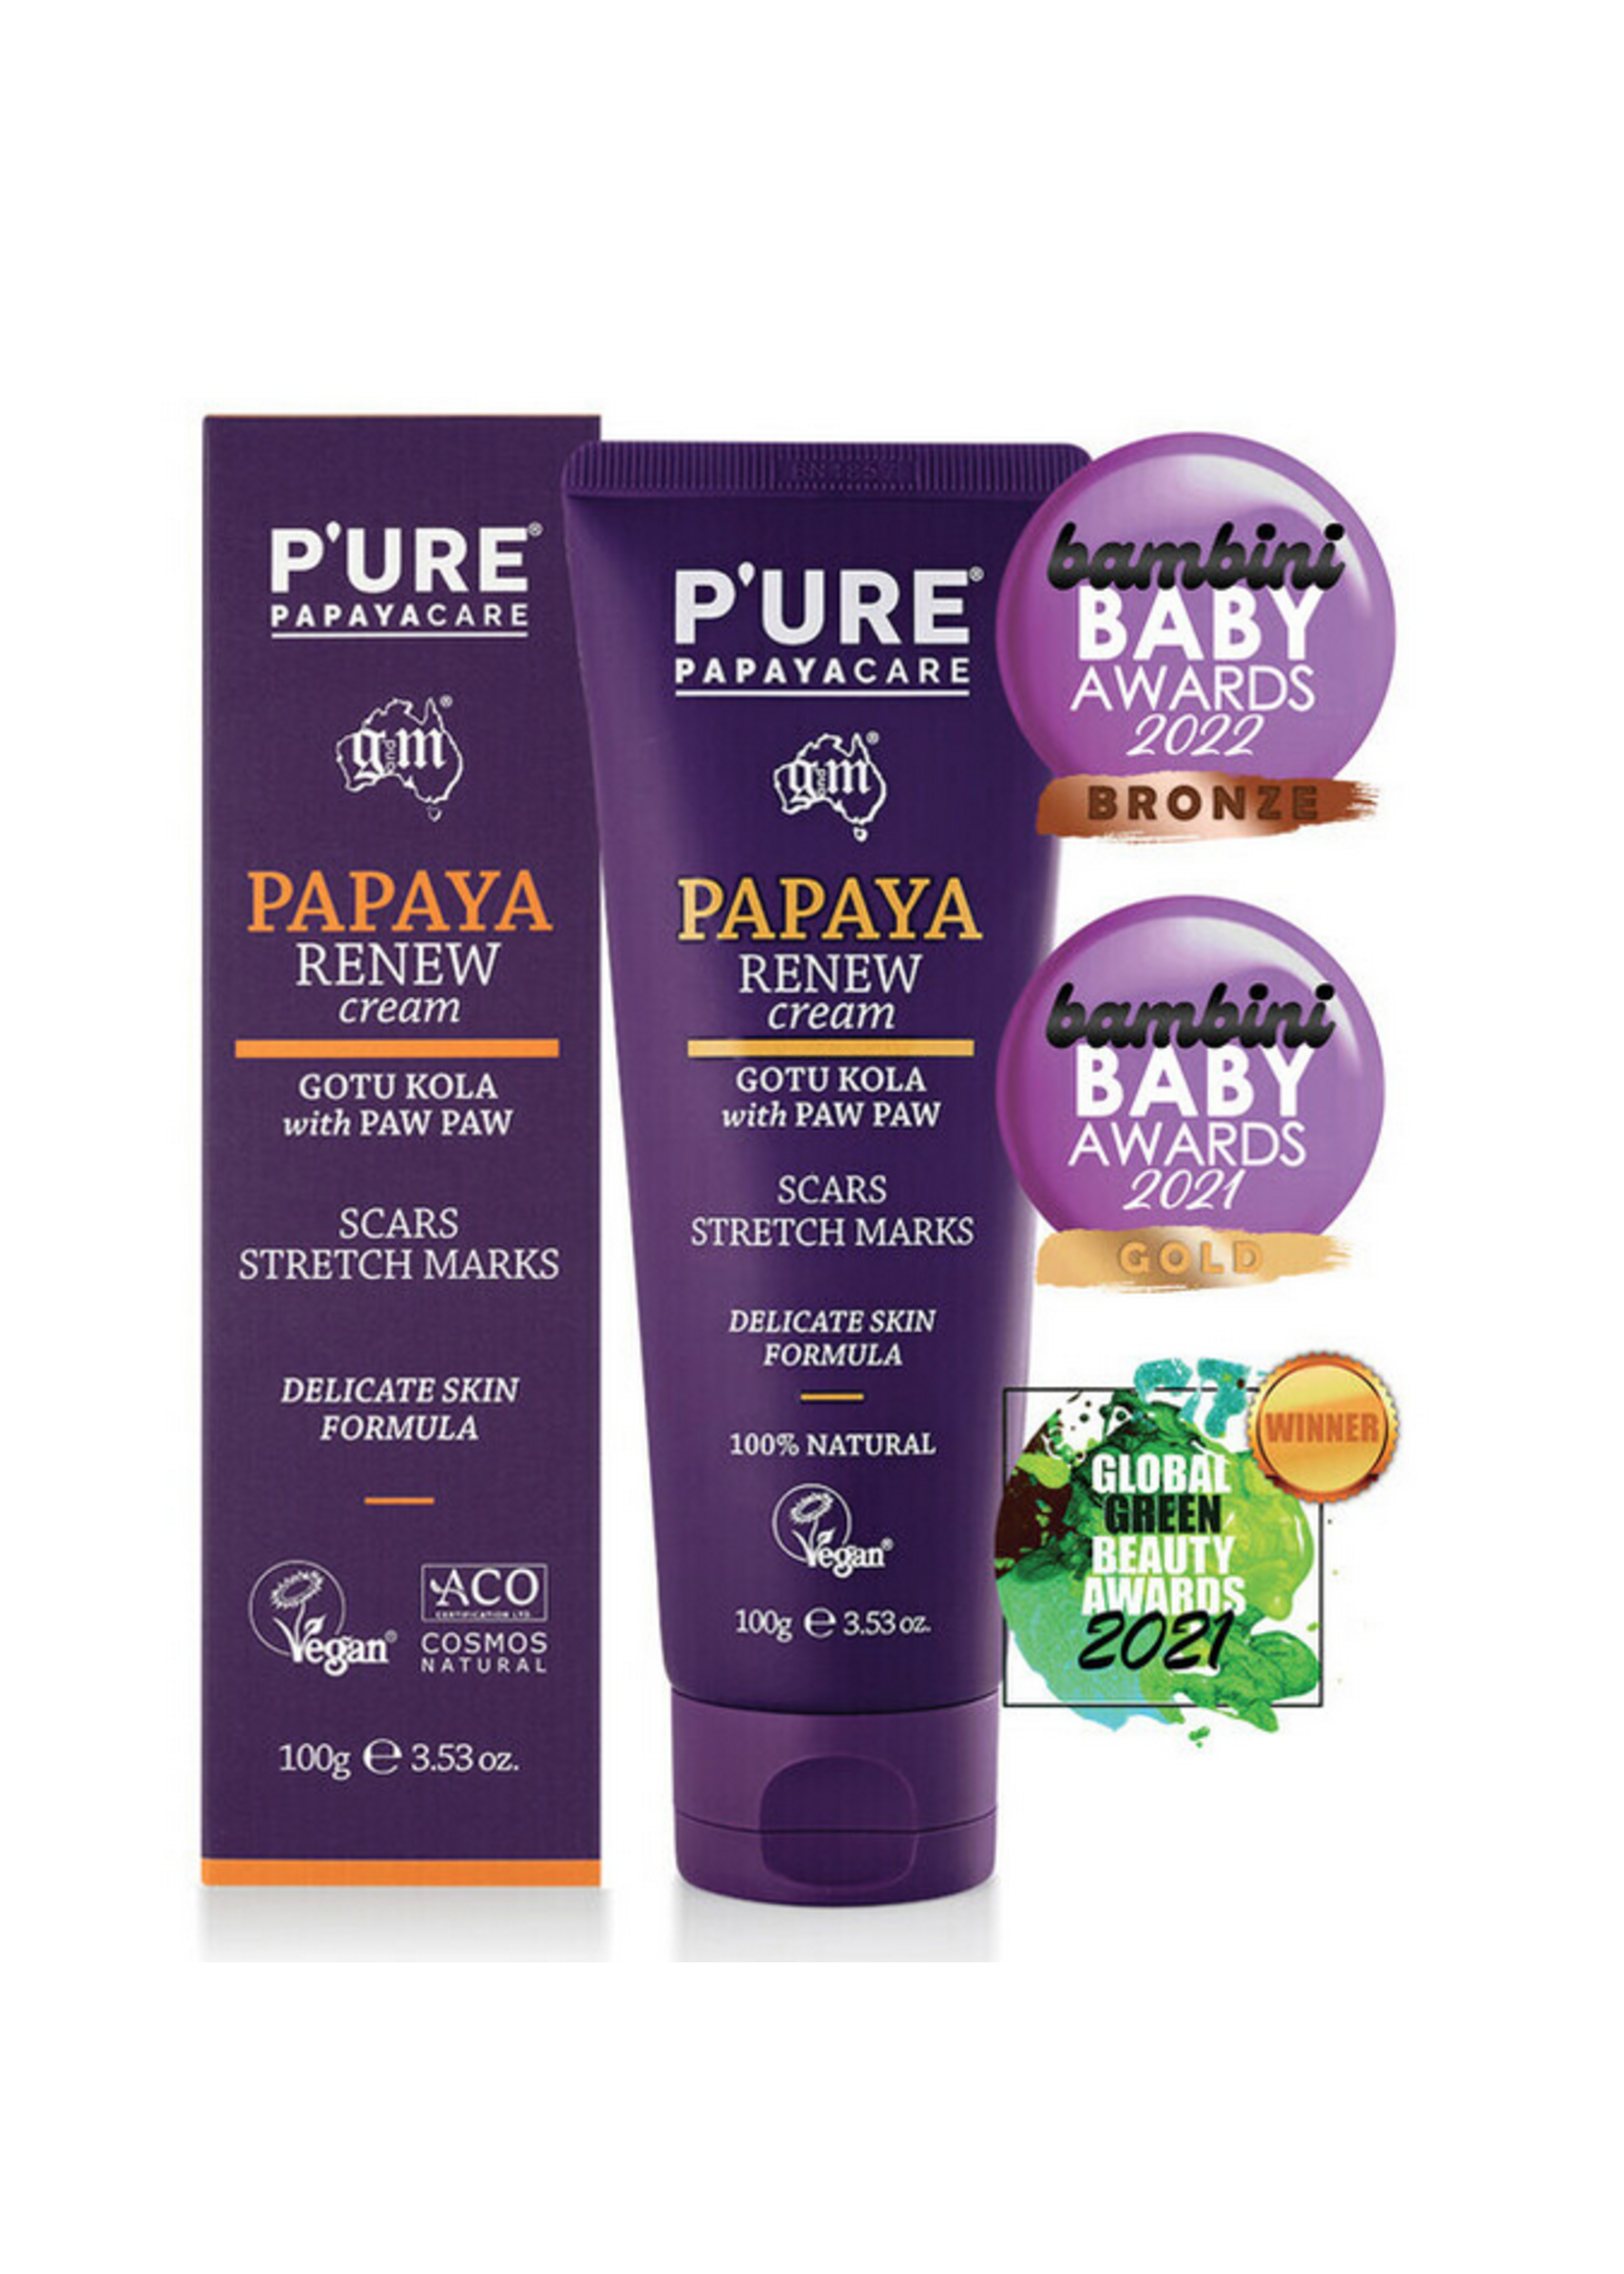 P'ure Papayacare Pure Papayacare Papaya Renew Cream Scars & Stretch marks 100g